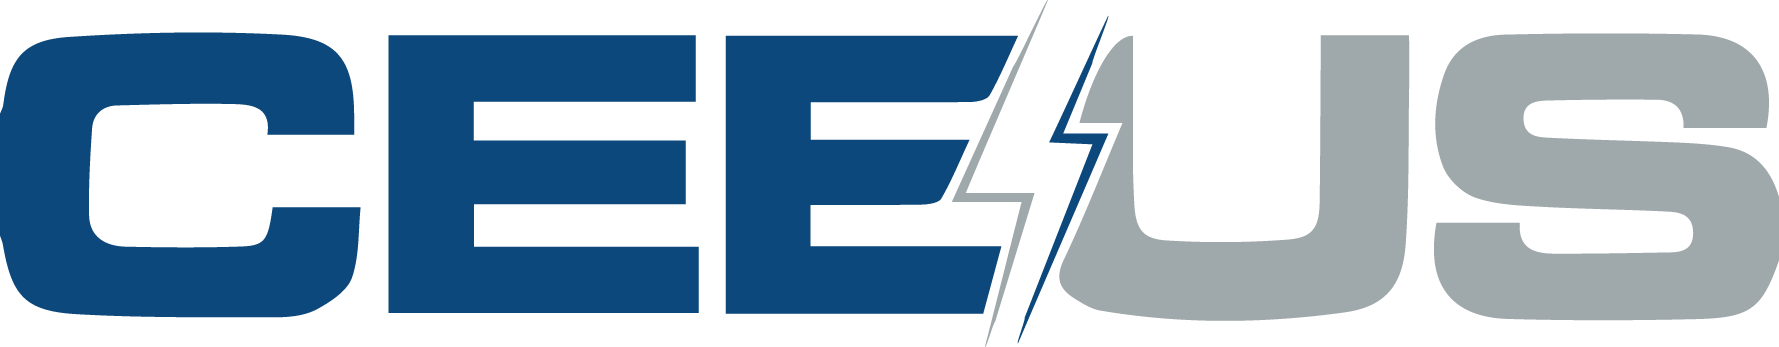 CEE-US logo